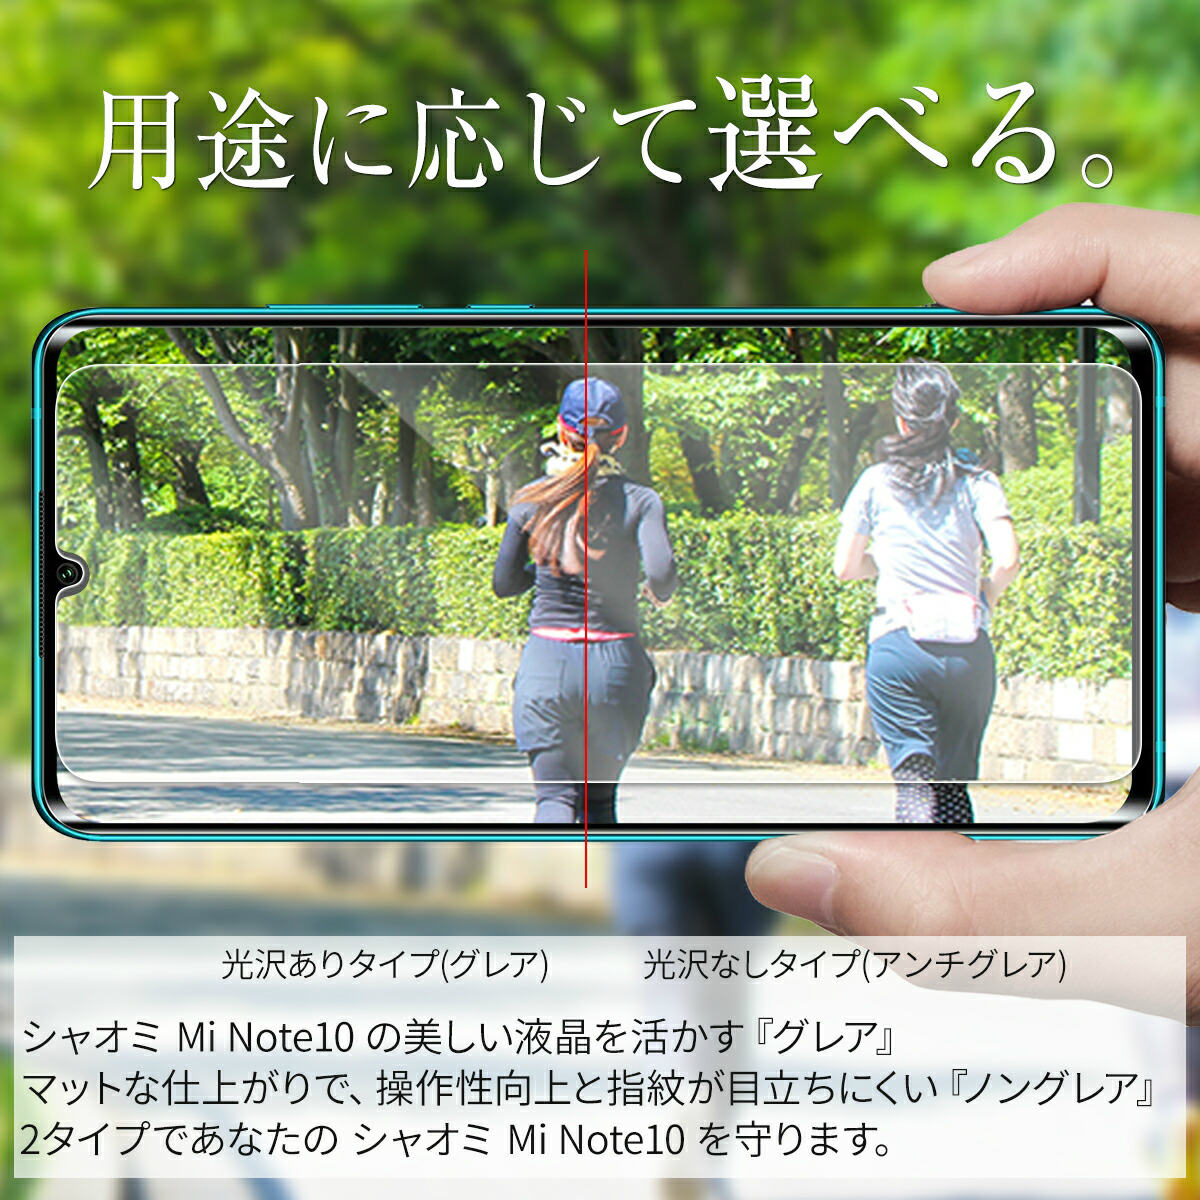 Xiaomi Mi Note 10 スマホ スマホケース 韓国 フィルム カバー スクリーンフィルム 画面保護 液晶保護 ブルーライトカット 携帯 シャオミー 人気 キズ防止 キズ 送料無料 液晶保護フィルム